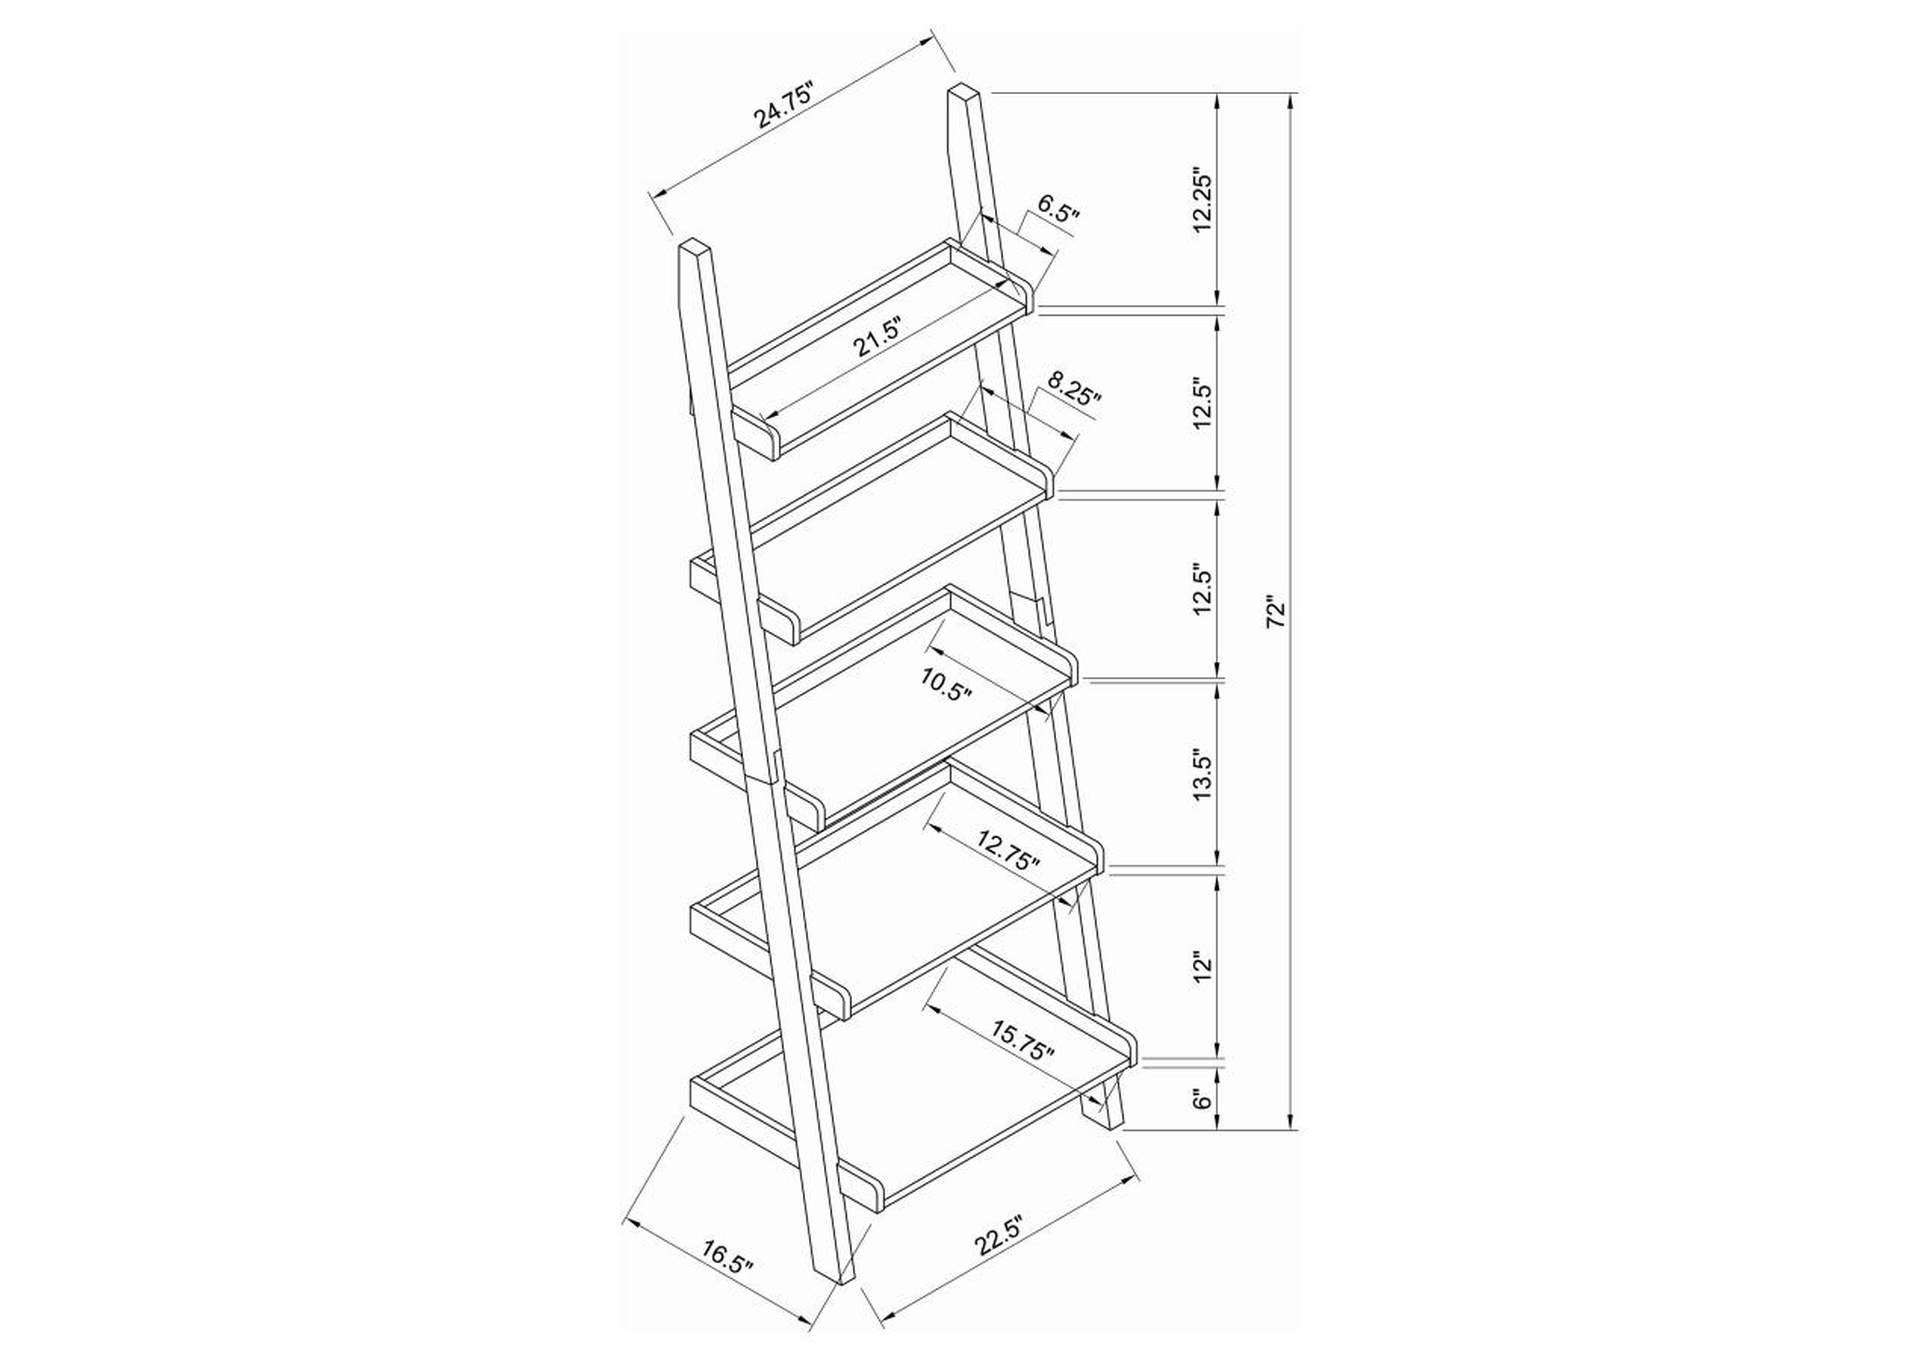 Colella 5 - shelf Ladder Bookcase Cappuccino,Coaster Furniture